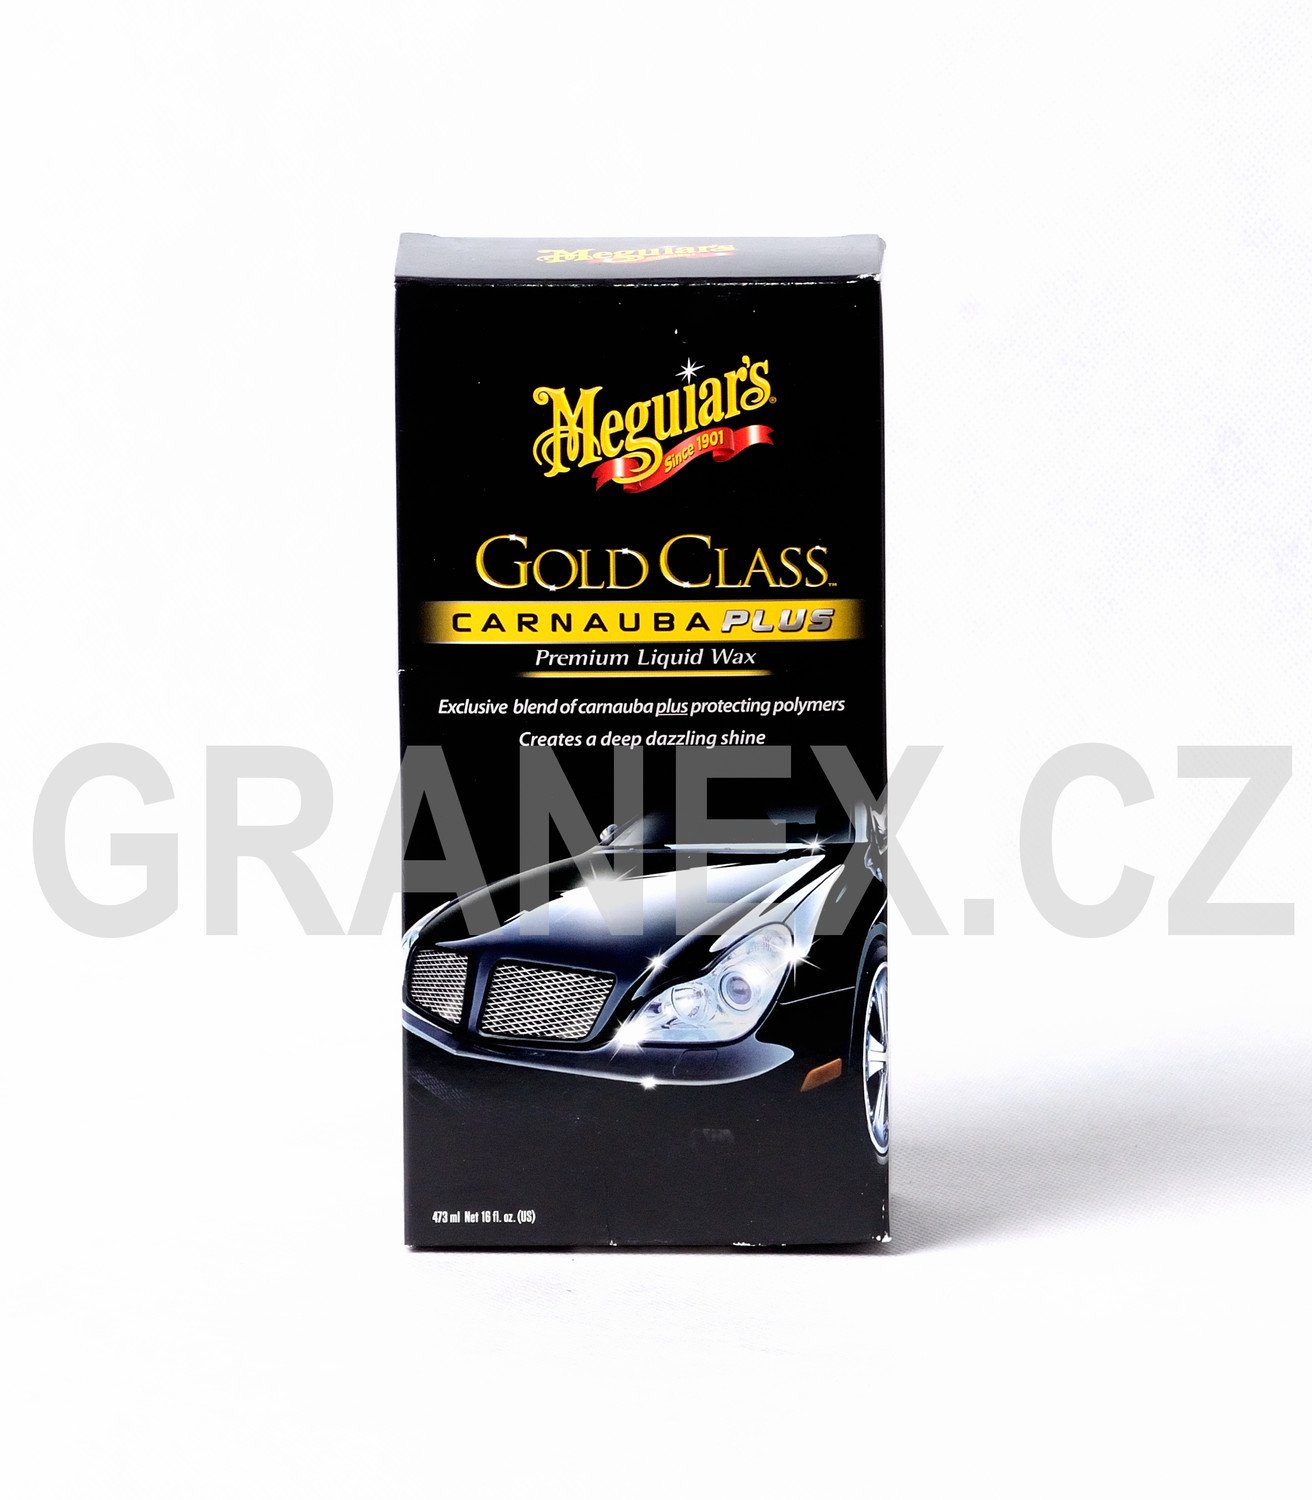 Meguiar's Gold Class Carnauba Plus Premium Liquid Wax tekutý vosk s obsahem přírodní karnauby 473 ml